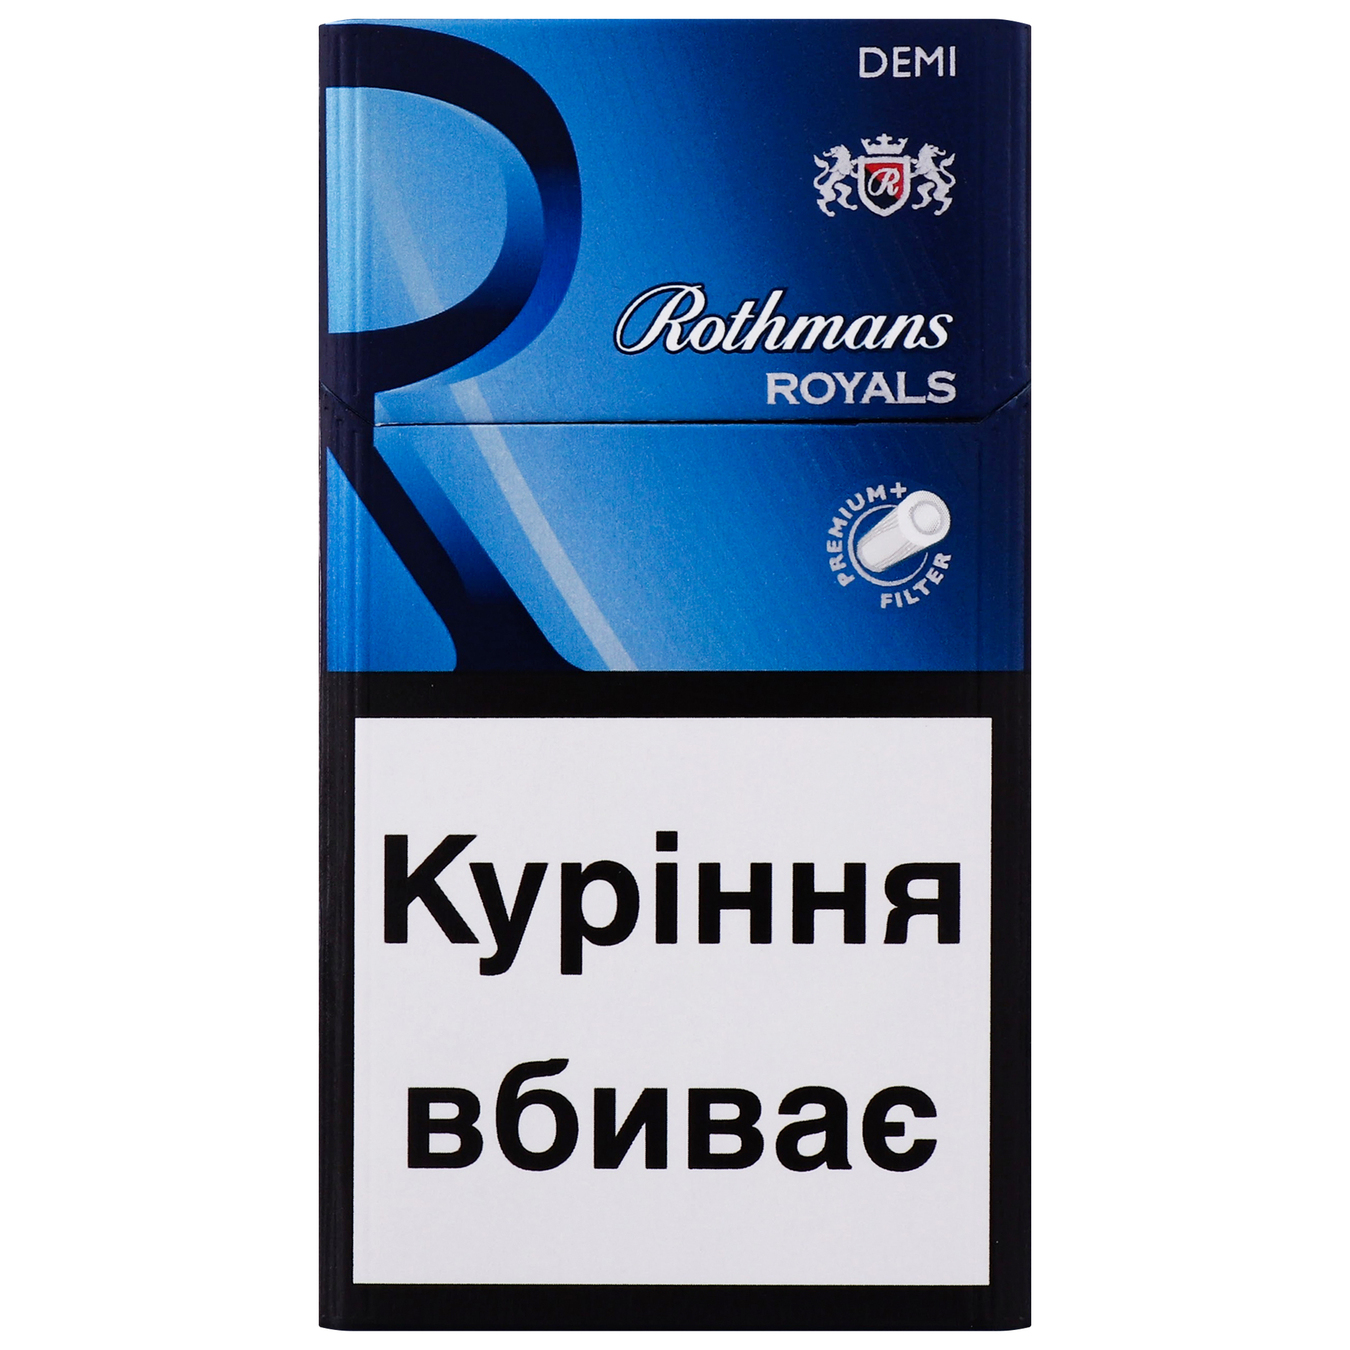 Сигарети Rothmans Royals Demi Blue з фільтром 20шт (ціна вказана без акцизу)